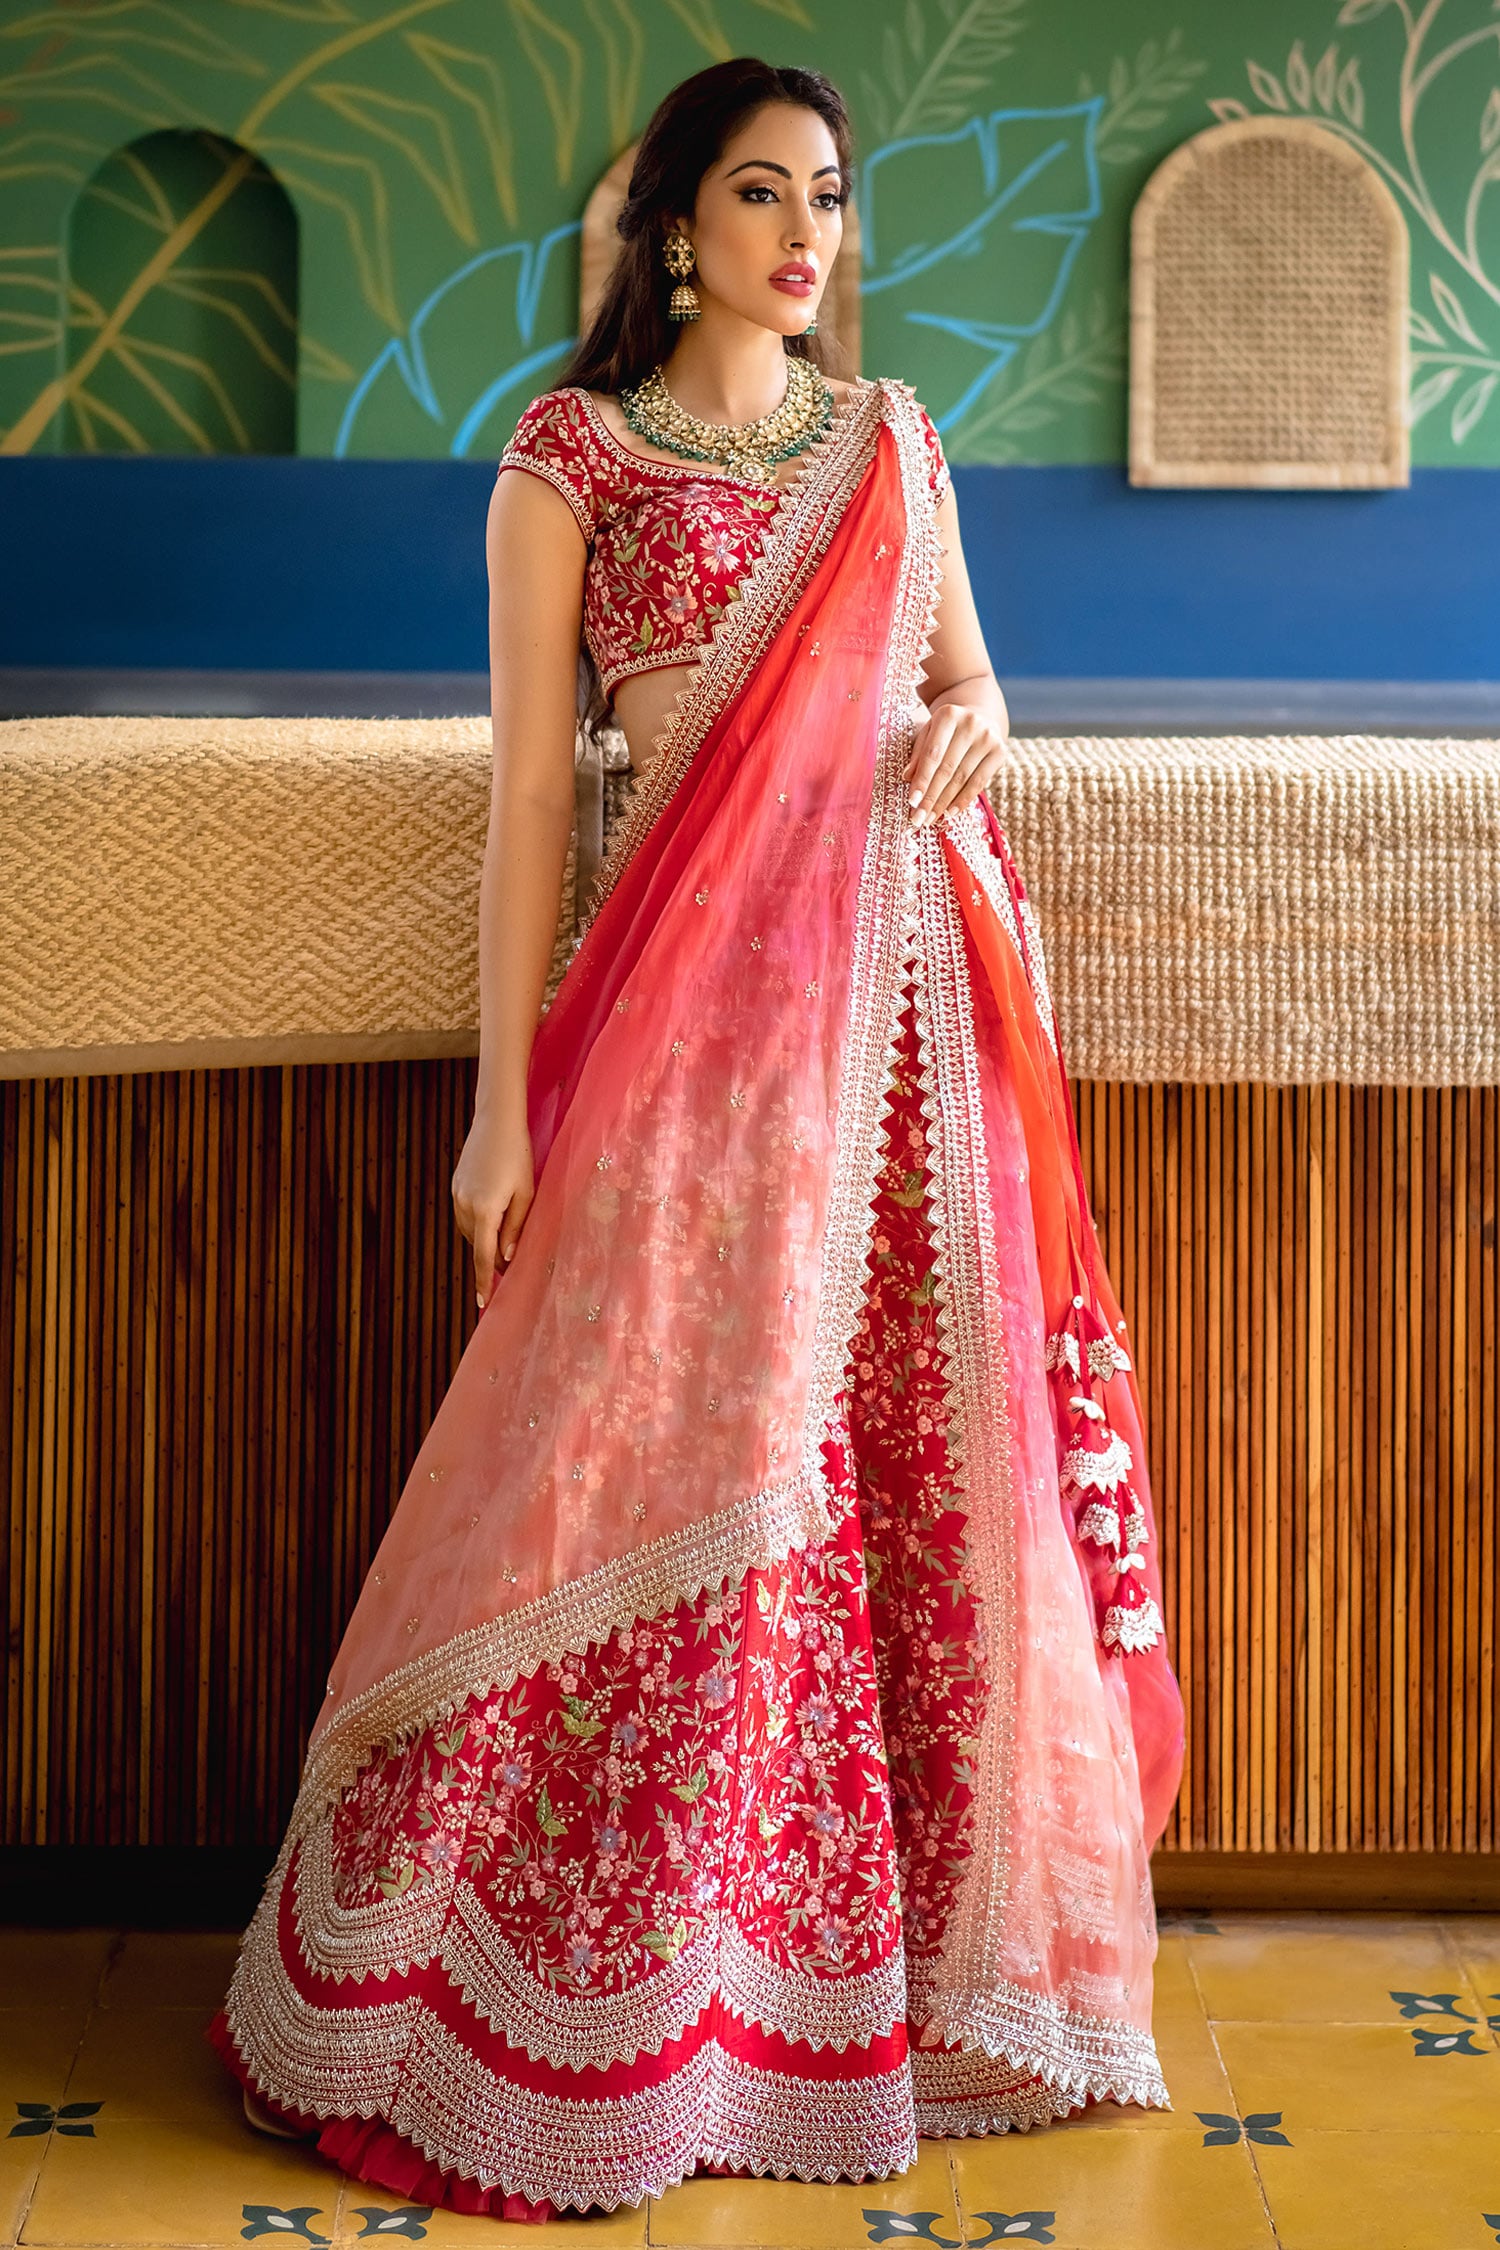 Anushree Reddy's pink floral lehenga is a big hit. – GNG Magazine